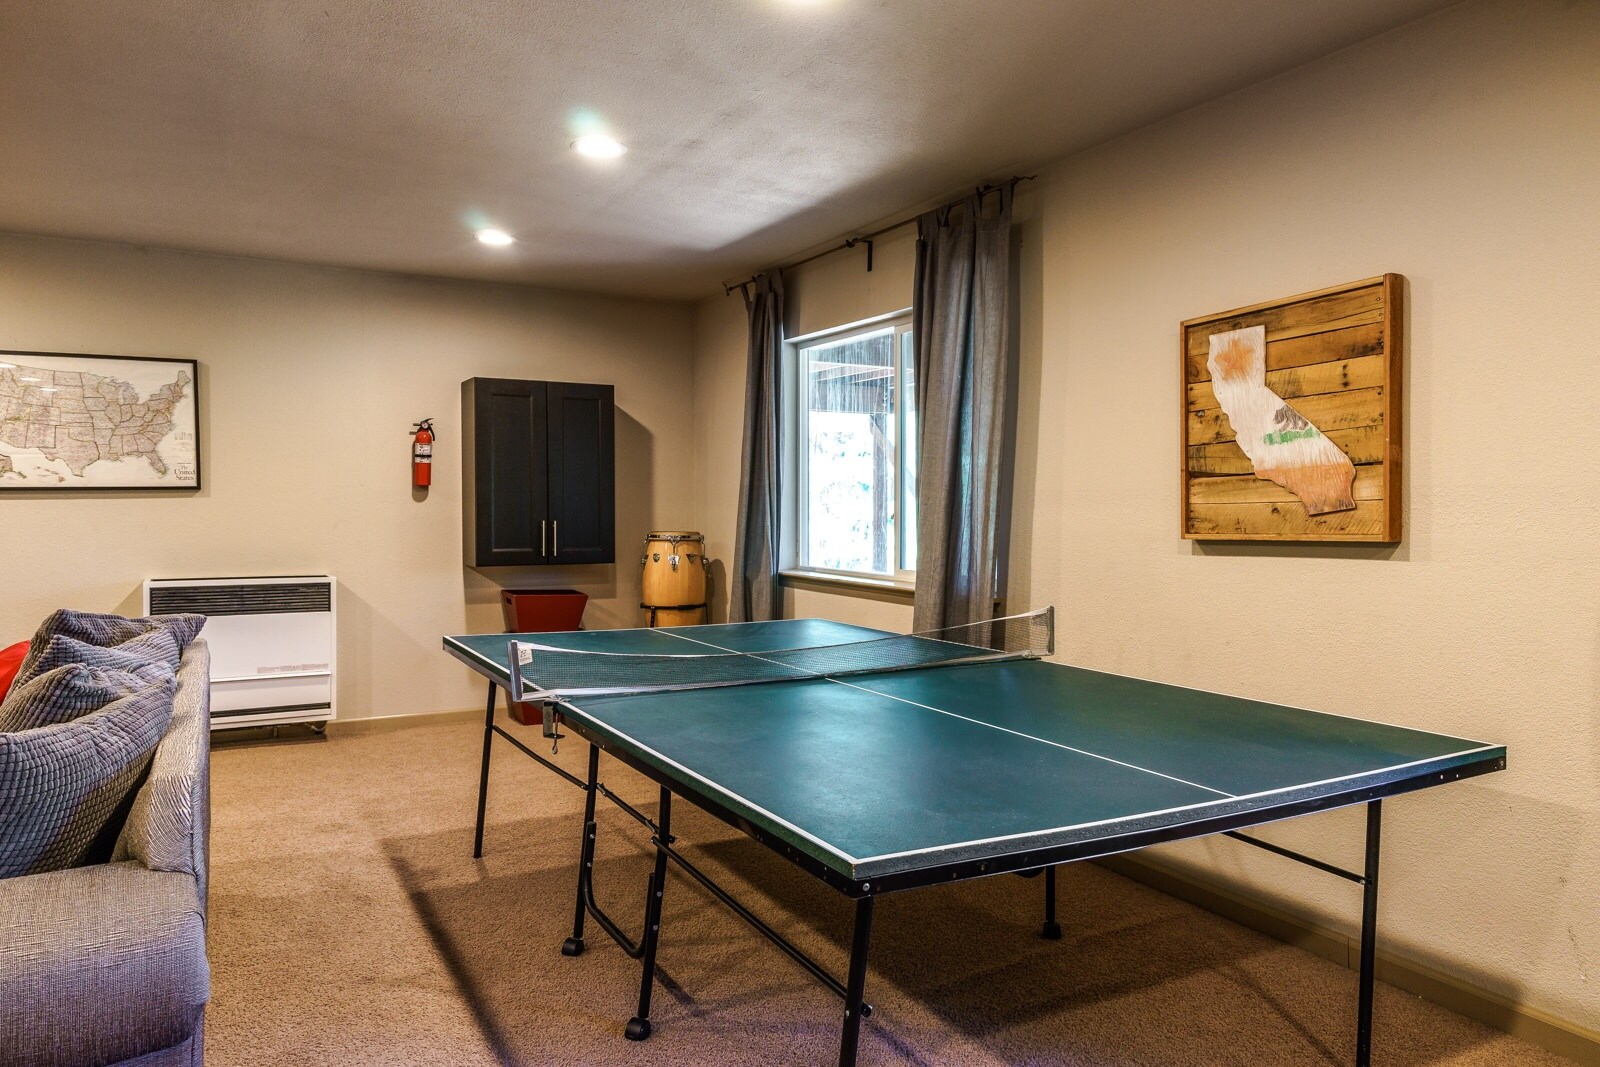 Ping Pong in bonus room on lower level. Unit 8 Lot 15, Pine Mountain Lake Vacation Rental, Hillside Haven.